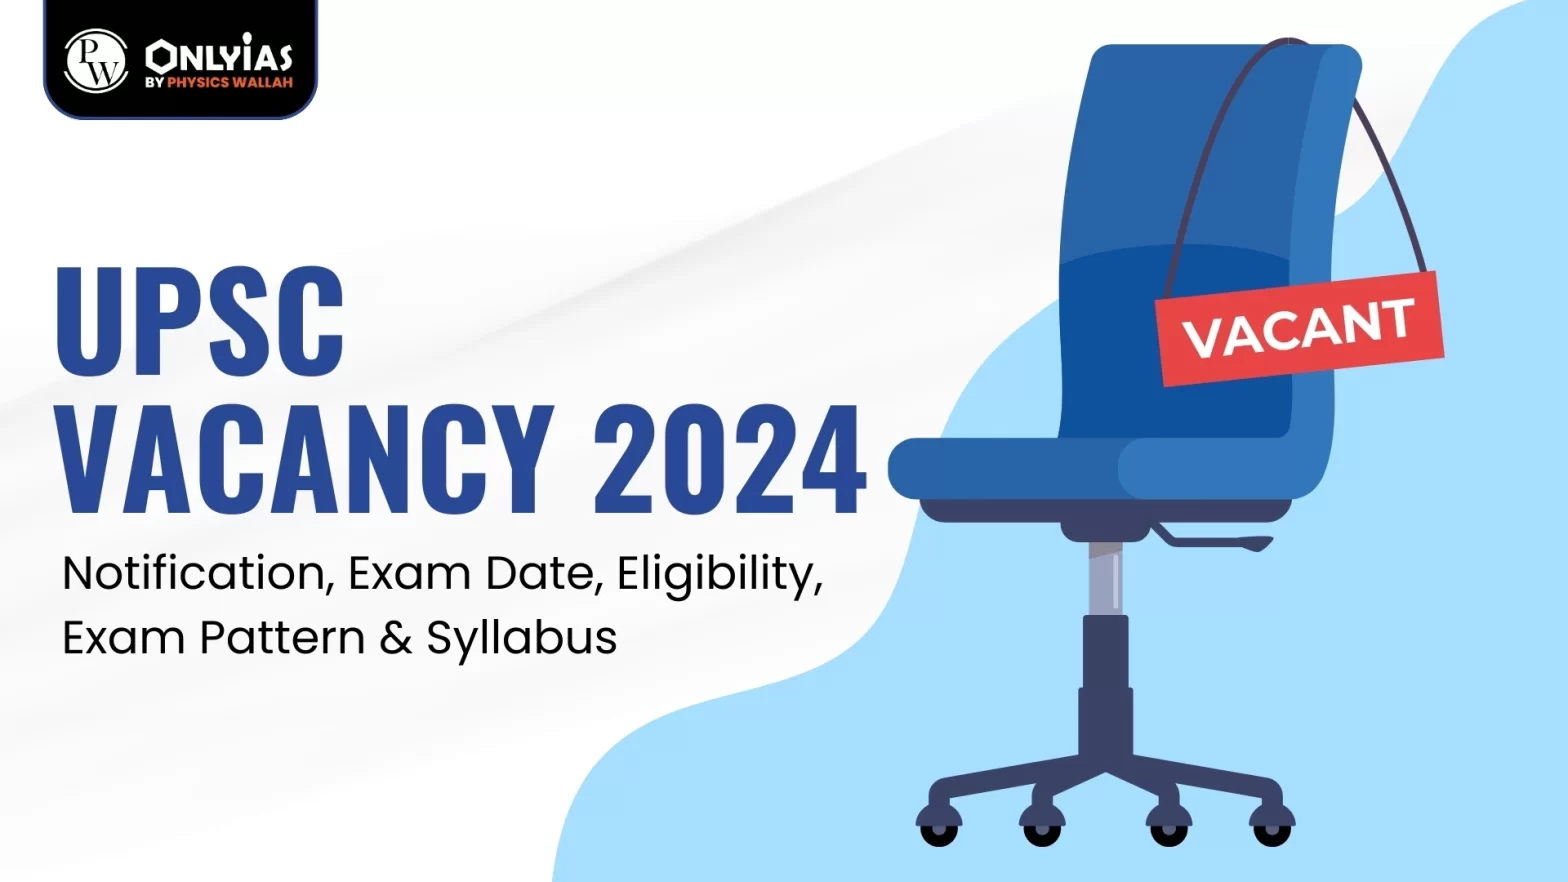 UPSC Vacancy 2024 Notification, Exam Date, Eligibility, Exam Pattern